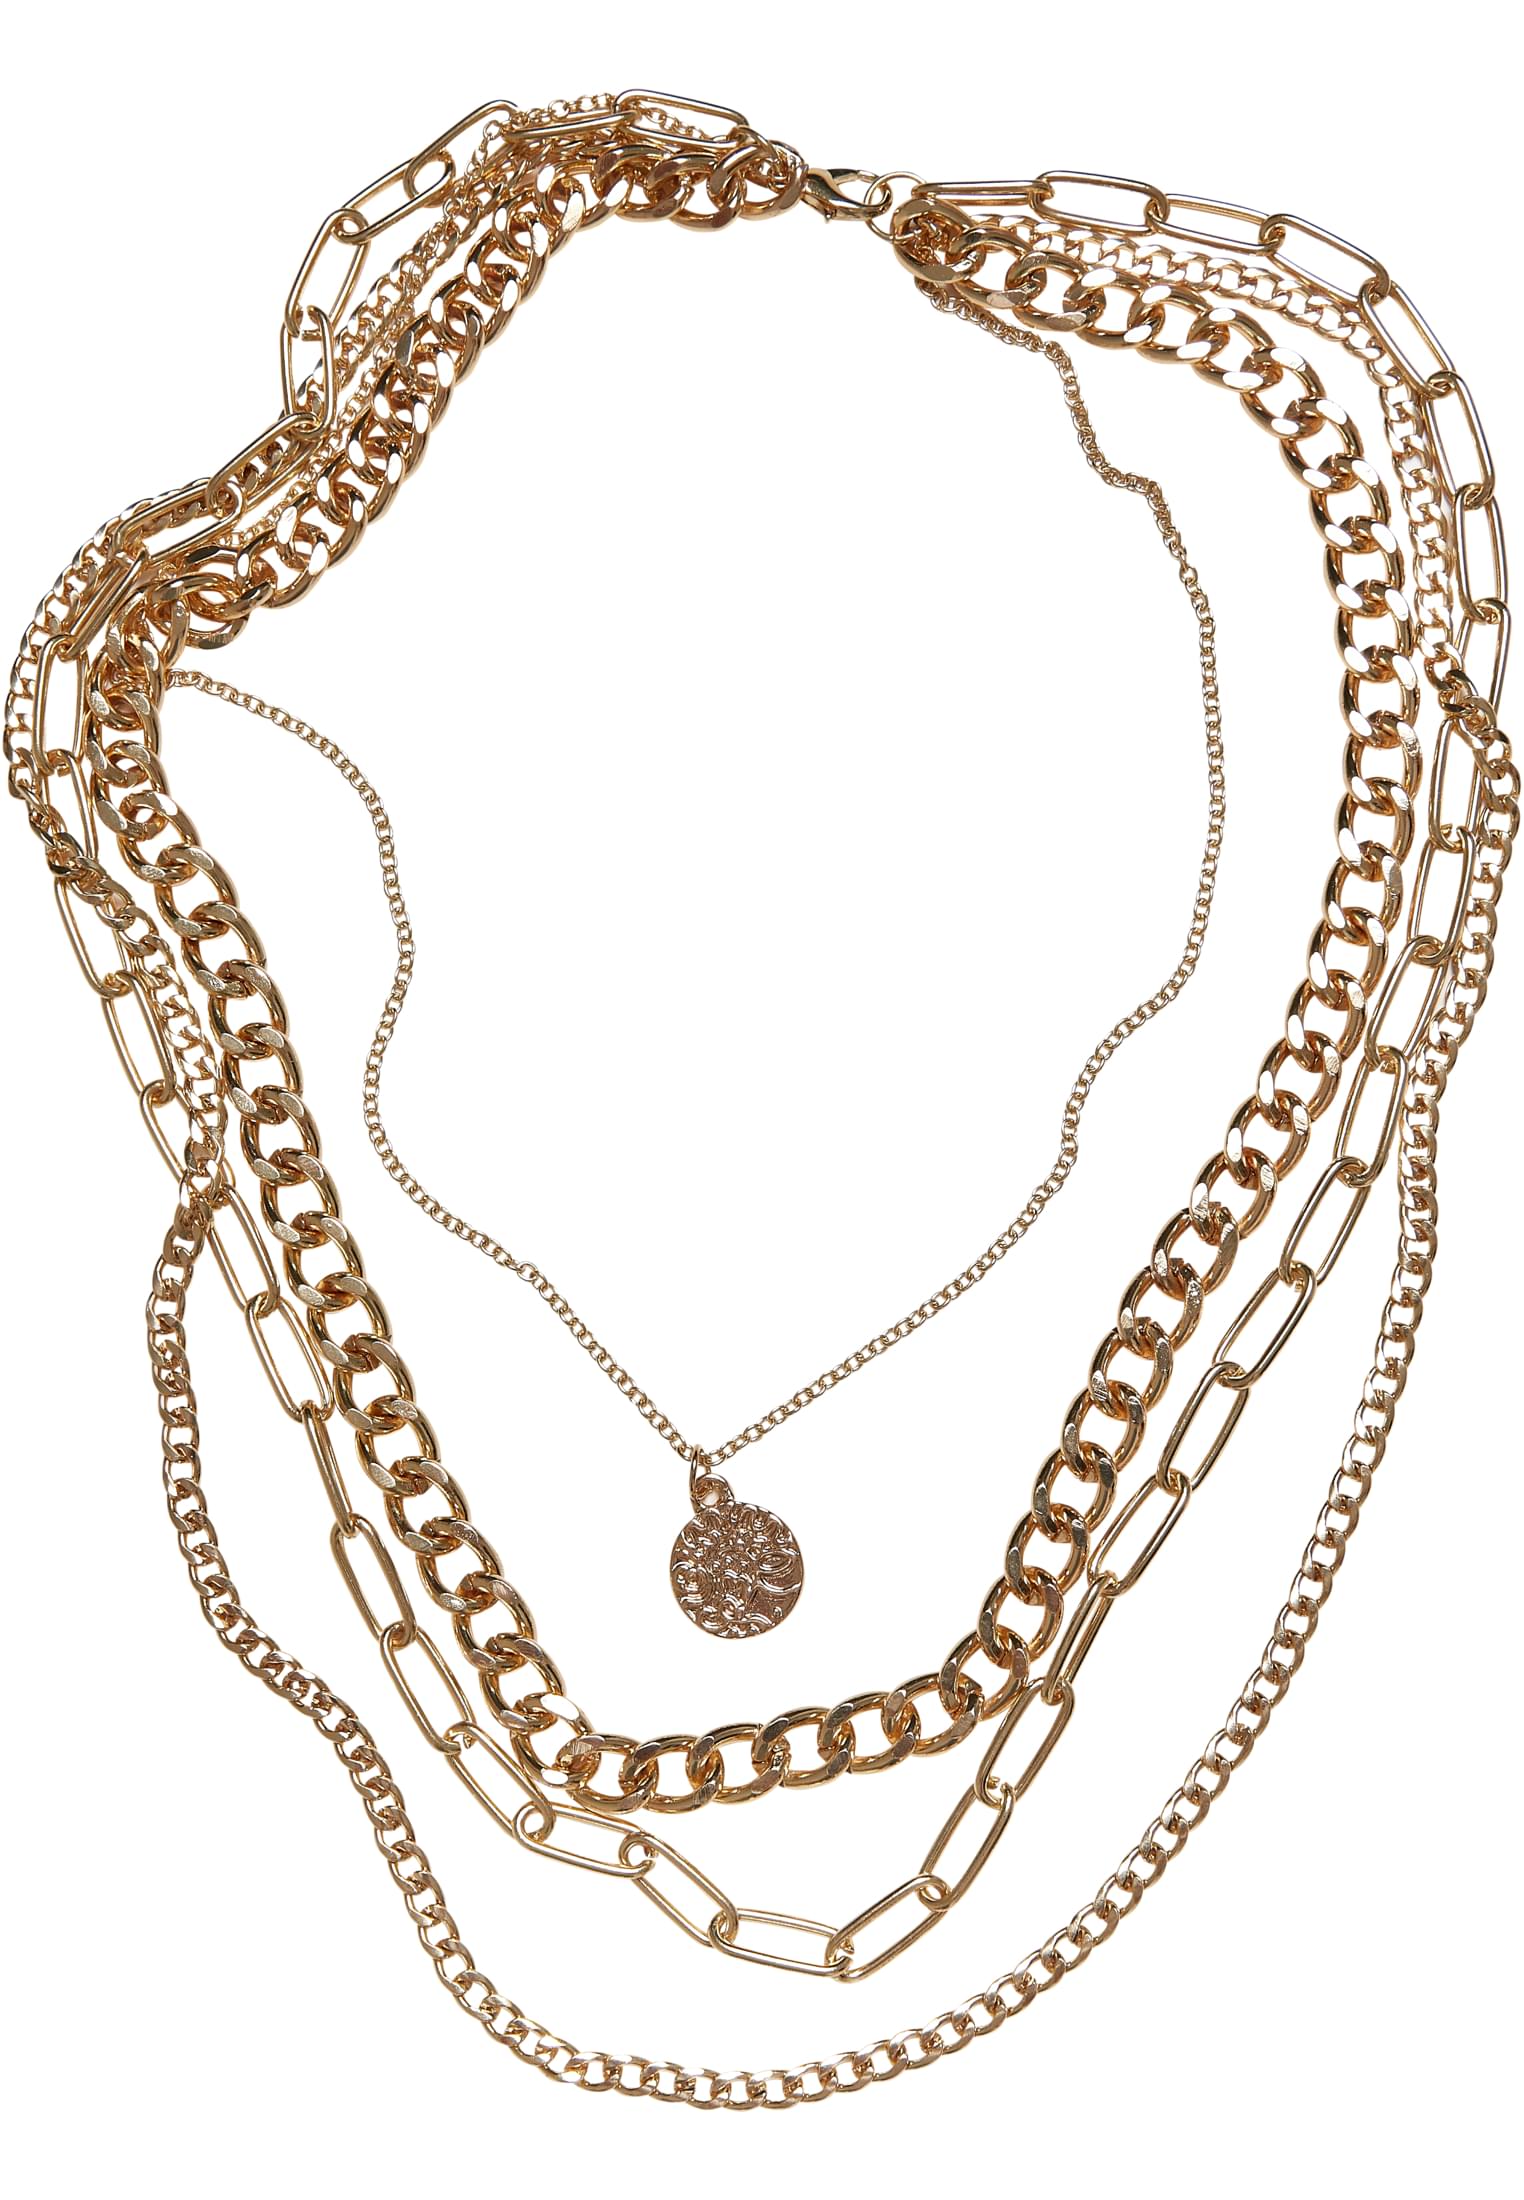 Penumbra necklace - gold color